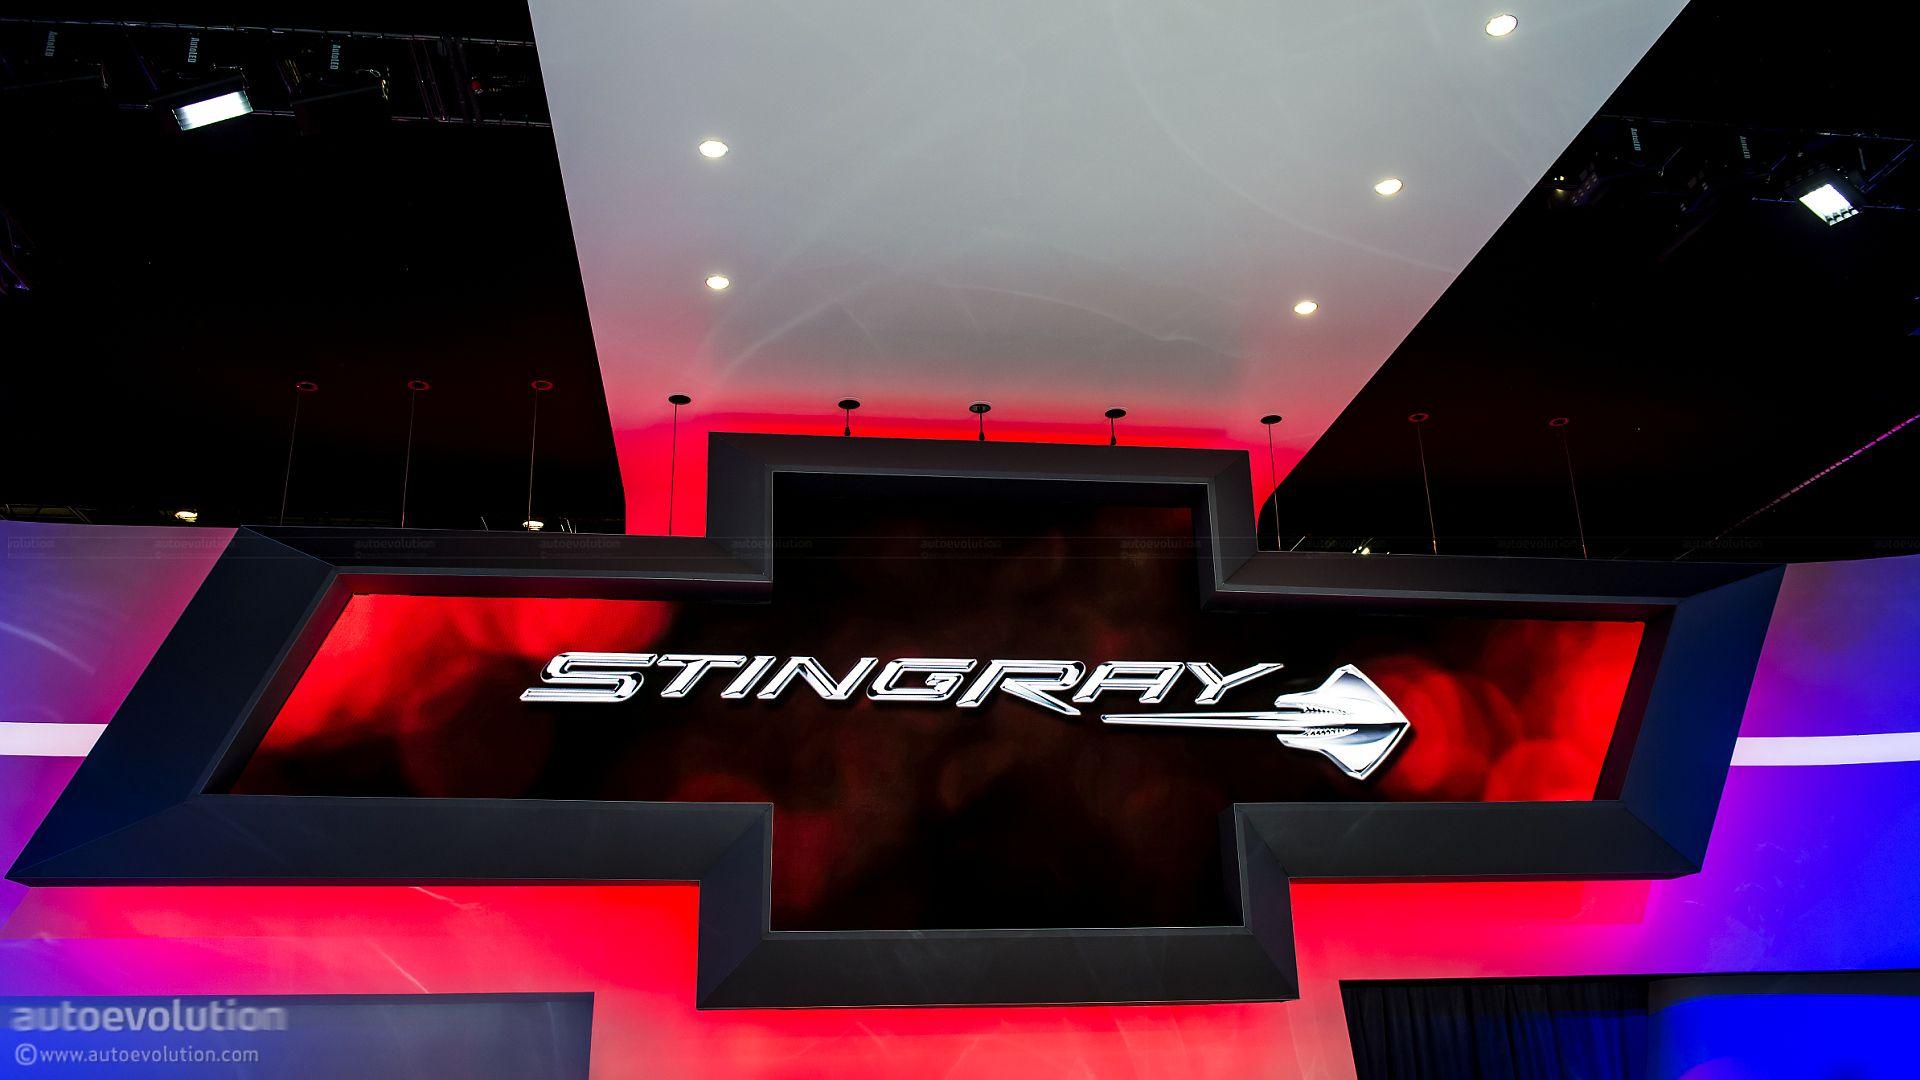 Chevrolet Corvette Stingray Logo - 2014 Chevrolet Corvette Stingray US Pricing Announced - autoevolution